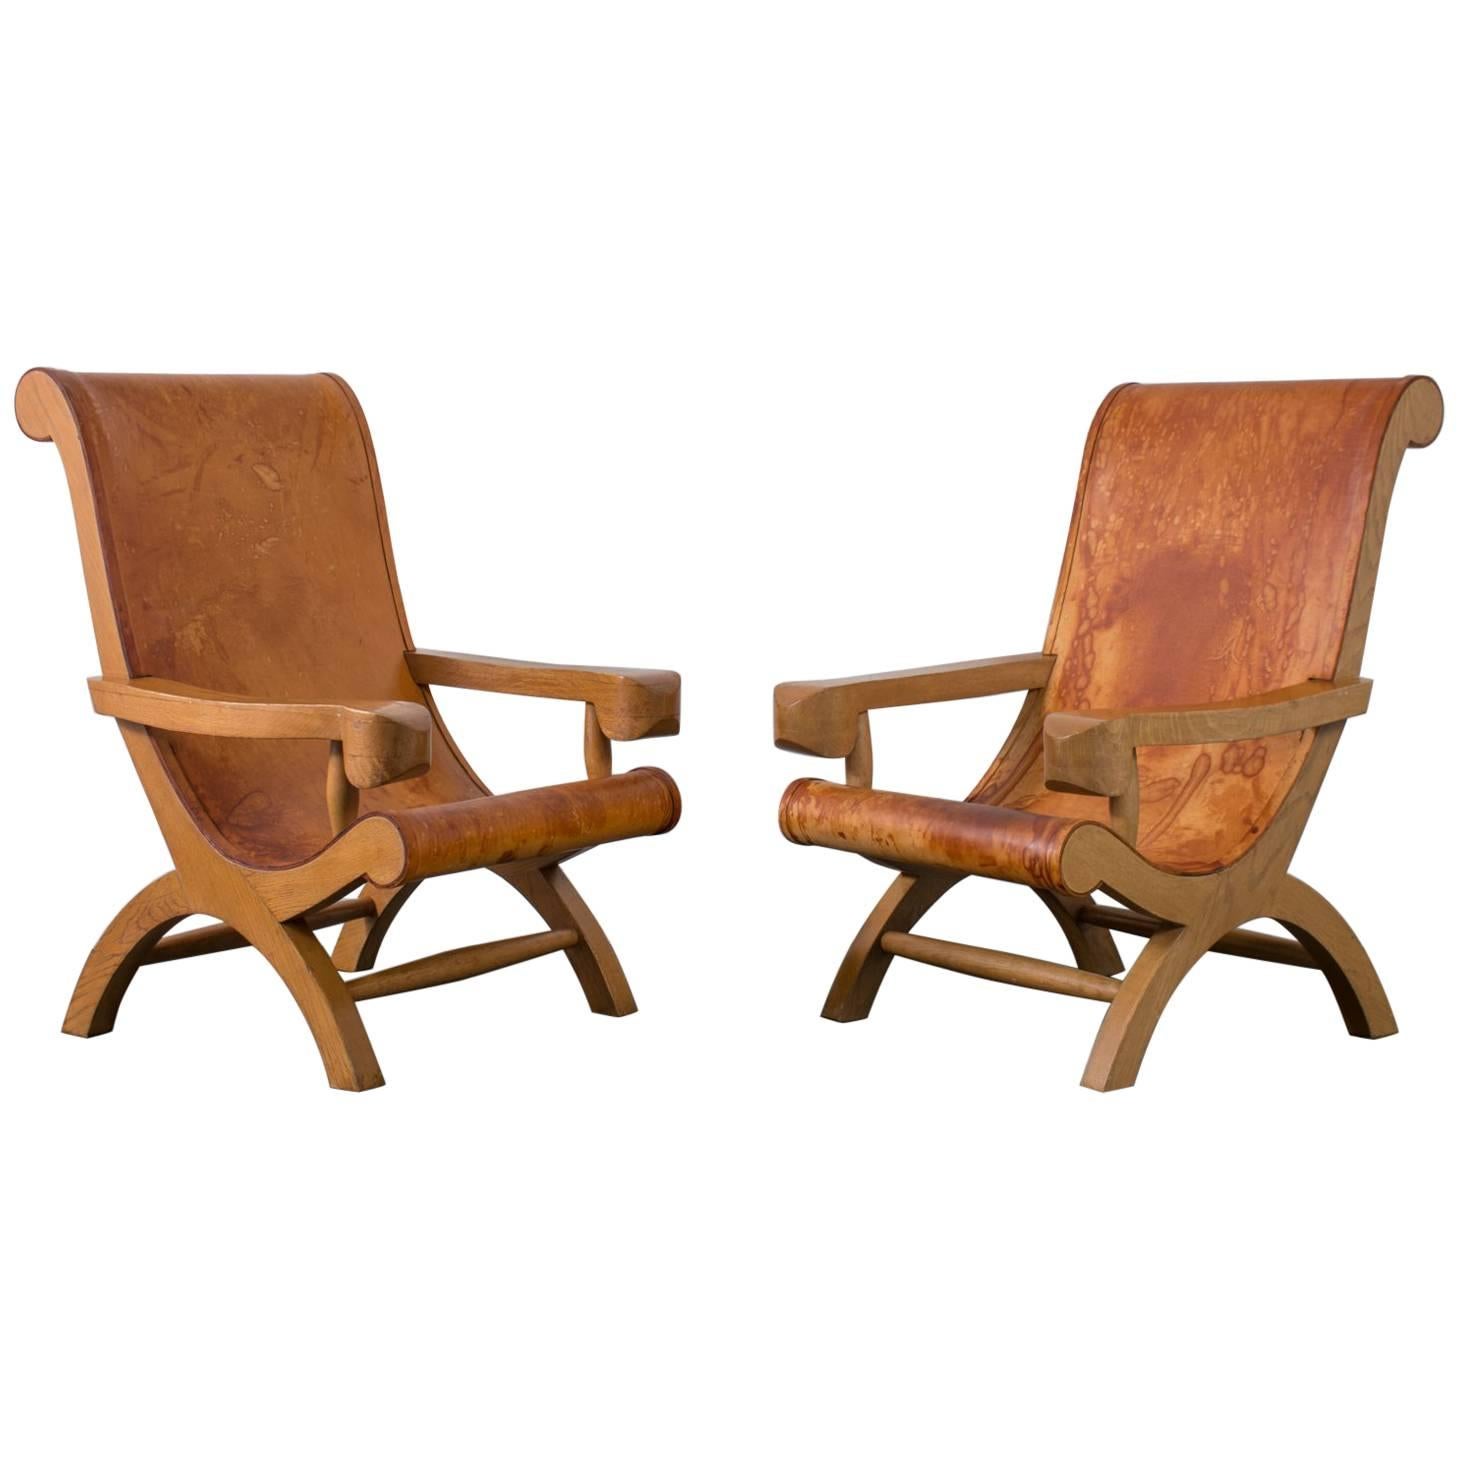 Clara Porset Butaque Chairs Attributed to Clara Porset, México, 1940s